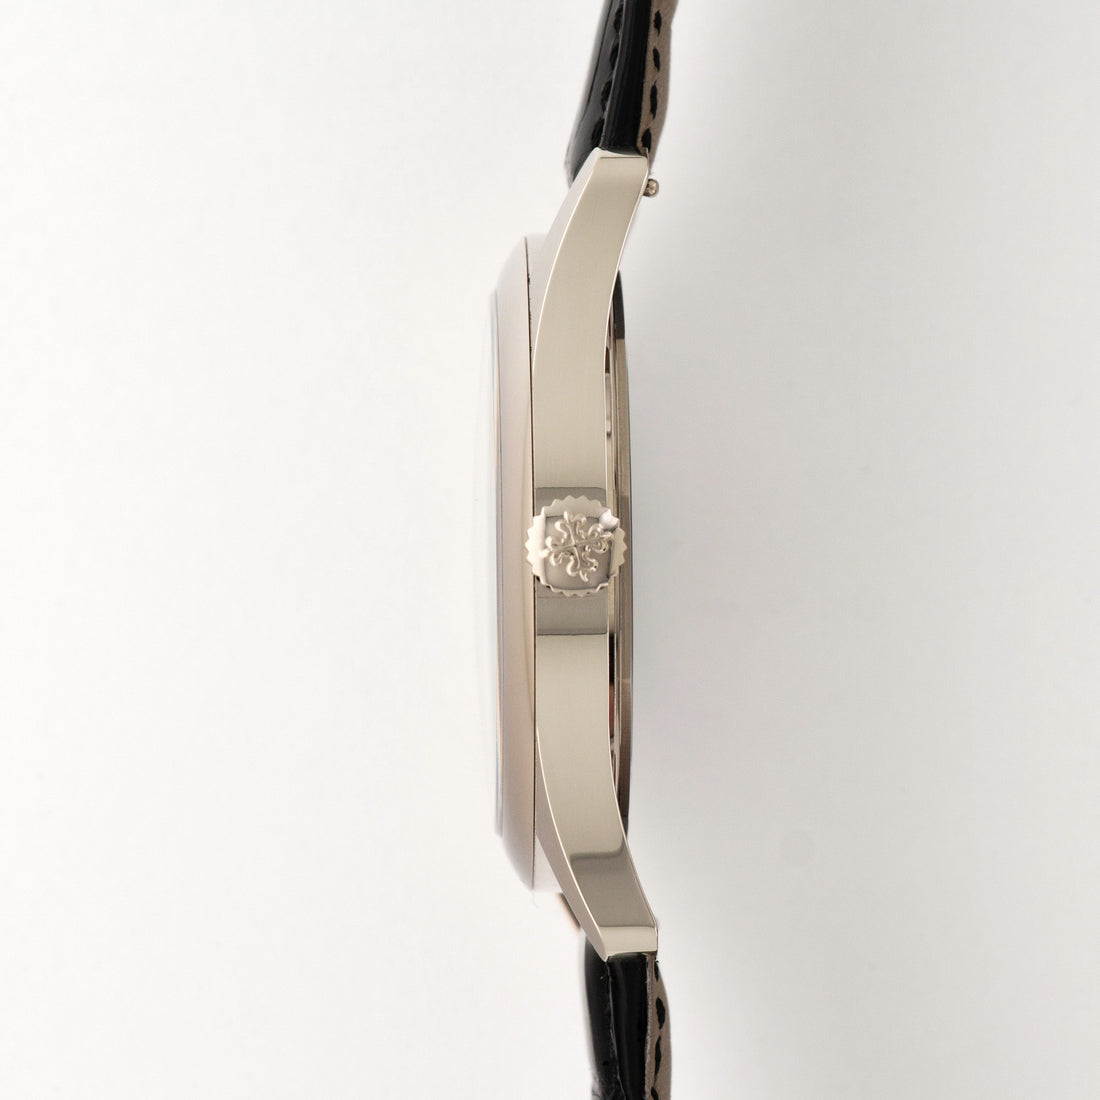 Patek Philippe White Gold Calatrava Automatic Watch Ref. 6006